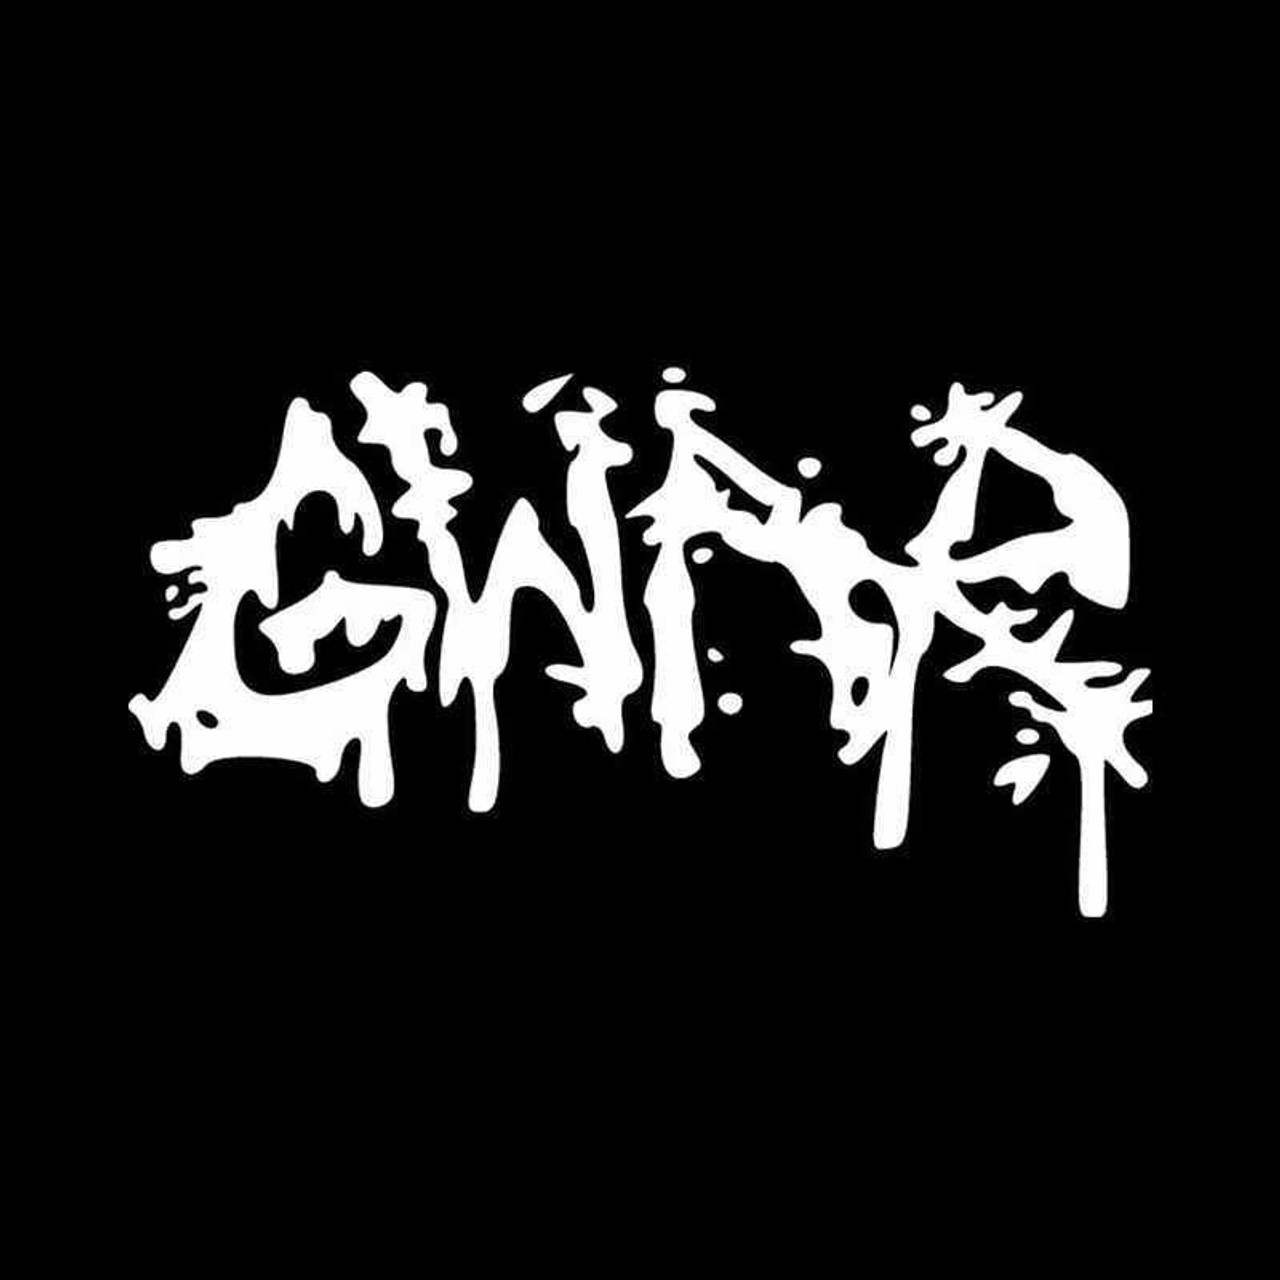 Gwar Blood Splatter Logo Vinyl Decal Sticker